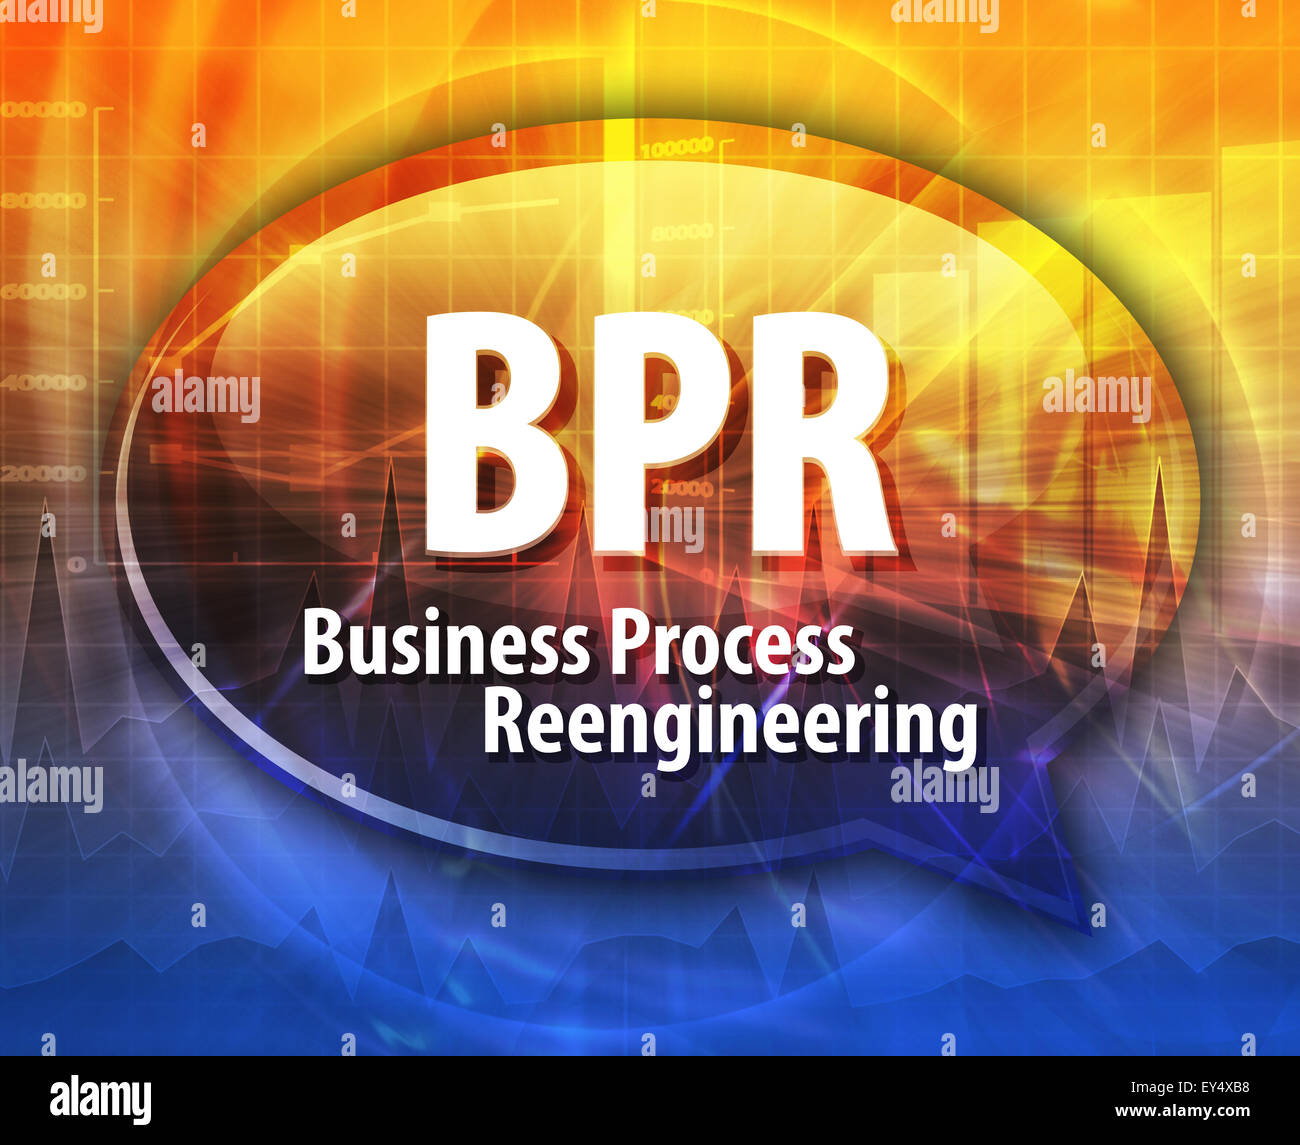 word speech bubble illustration of business acronym term BPR business process reengineering Stock Photo